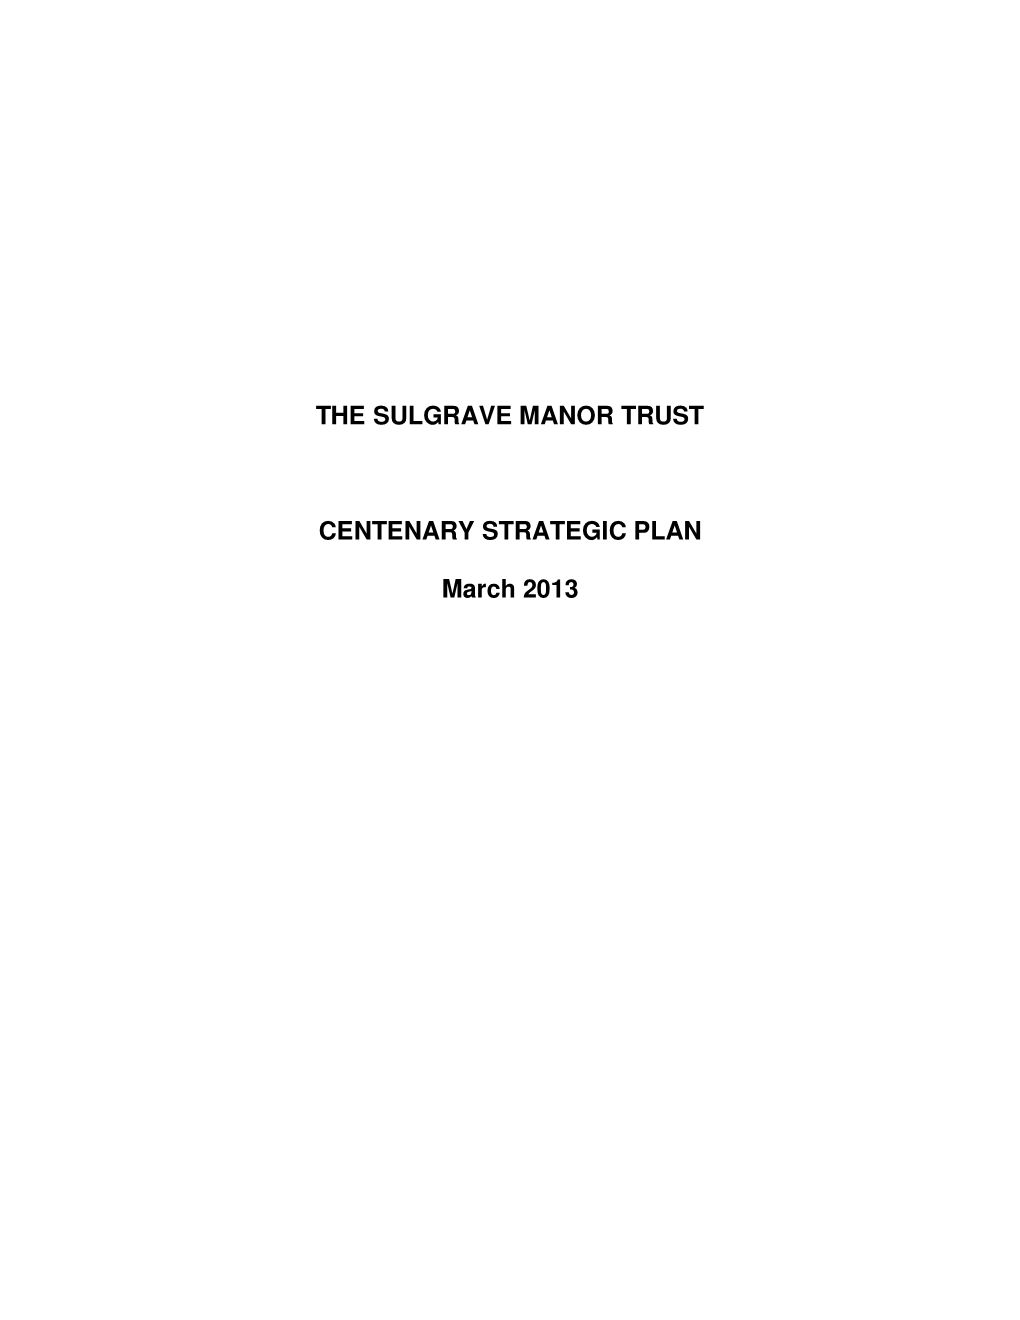 The Sulgrave Manor Trust Centenary Strategic Plan